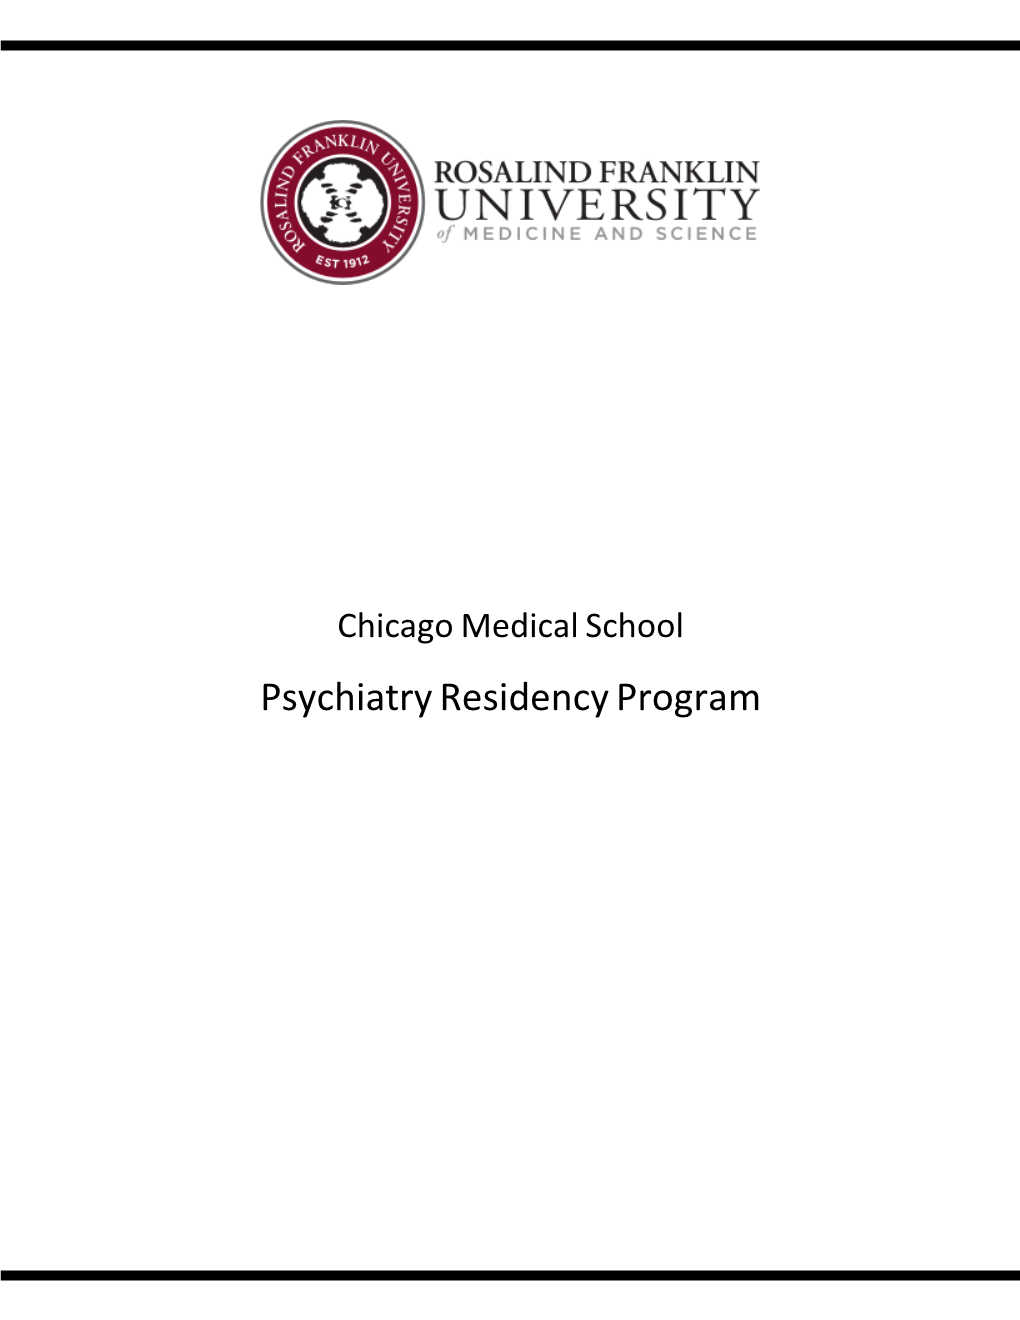 Chicago Medical School Psychiatry Residency Program from the Program Director